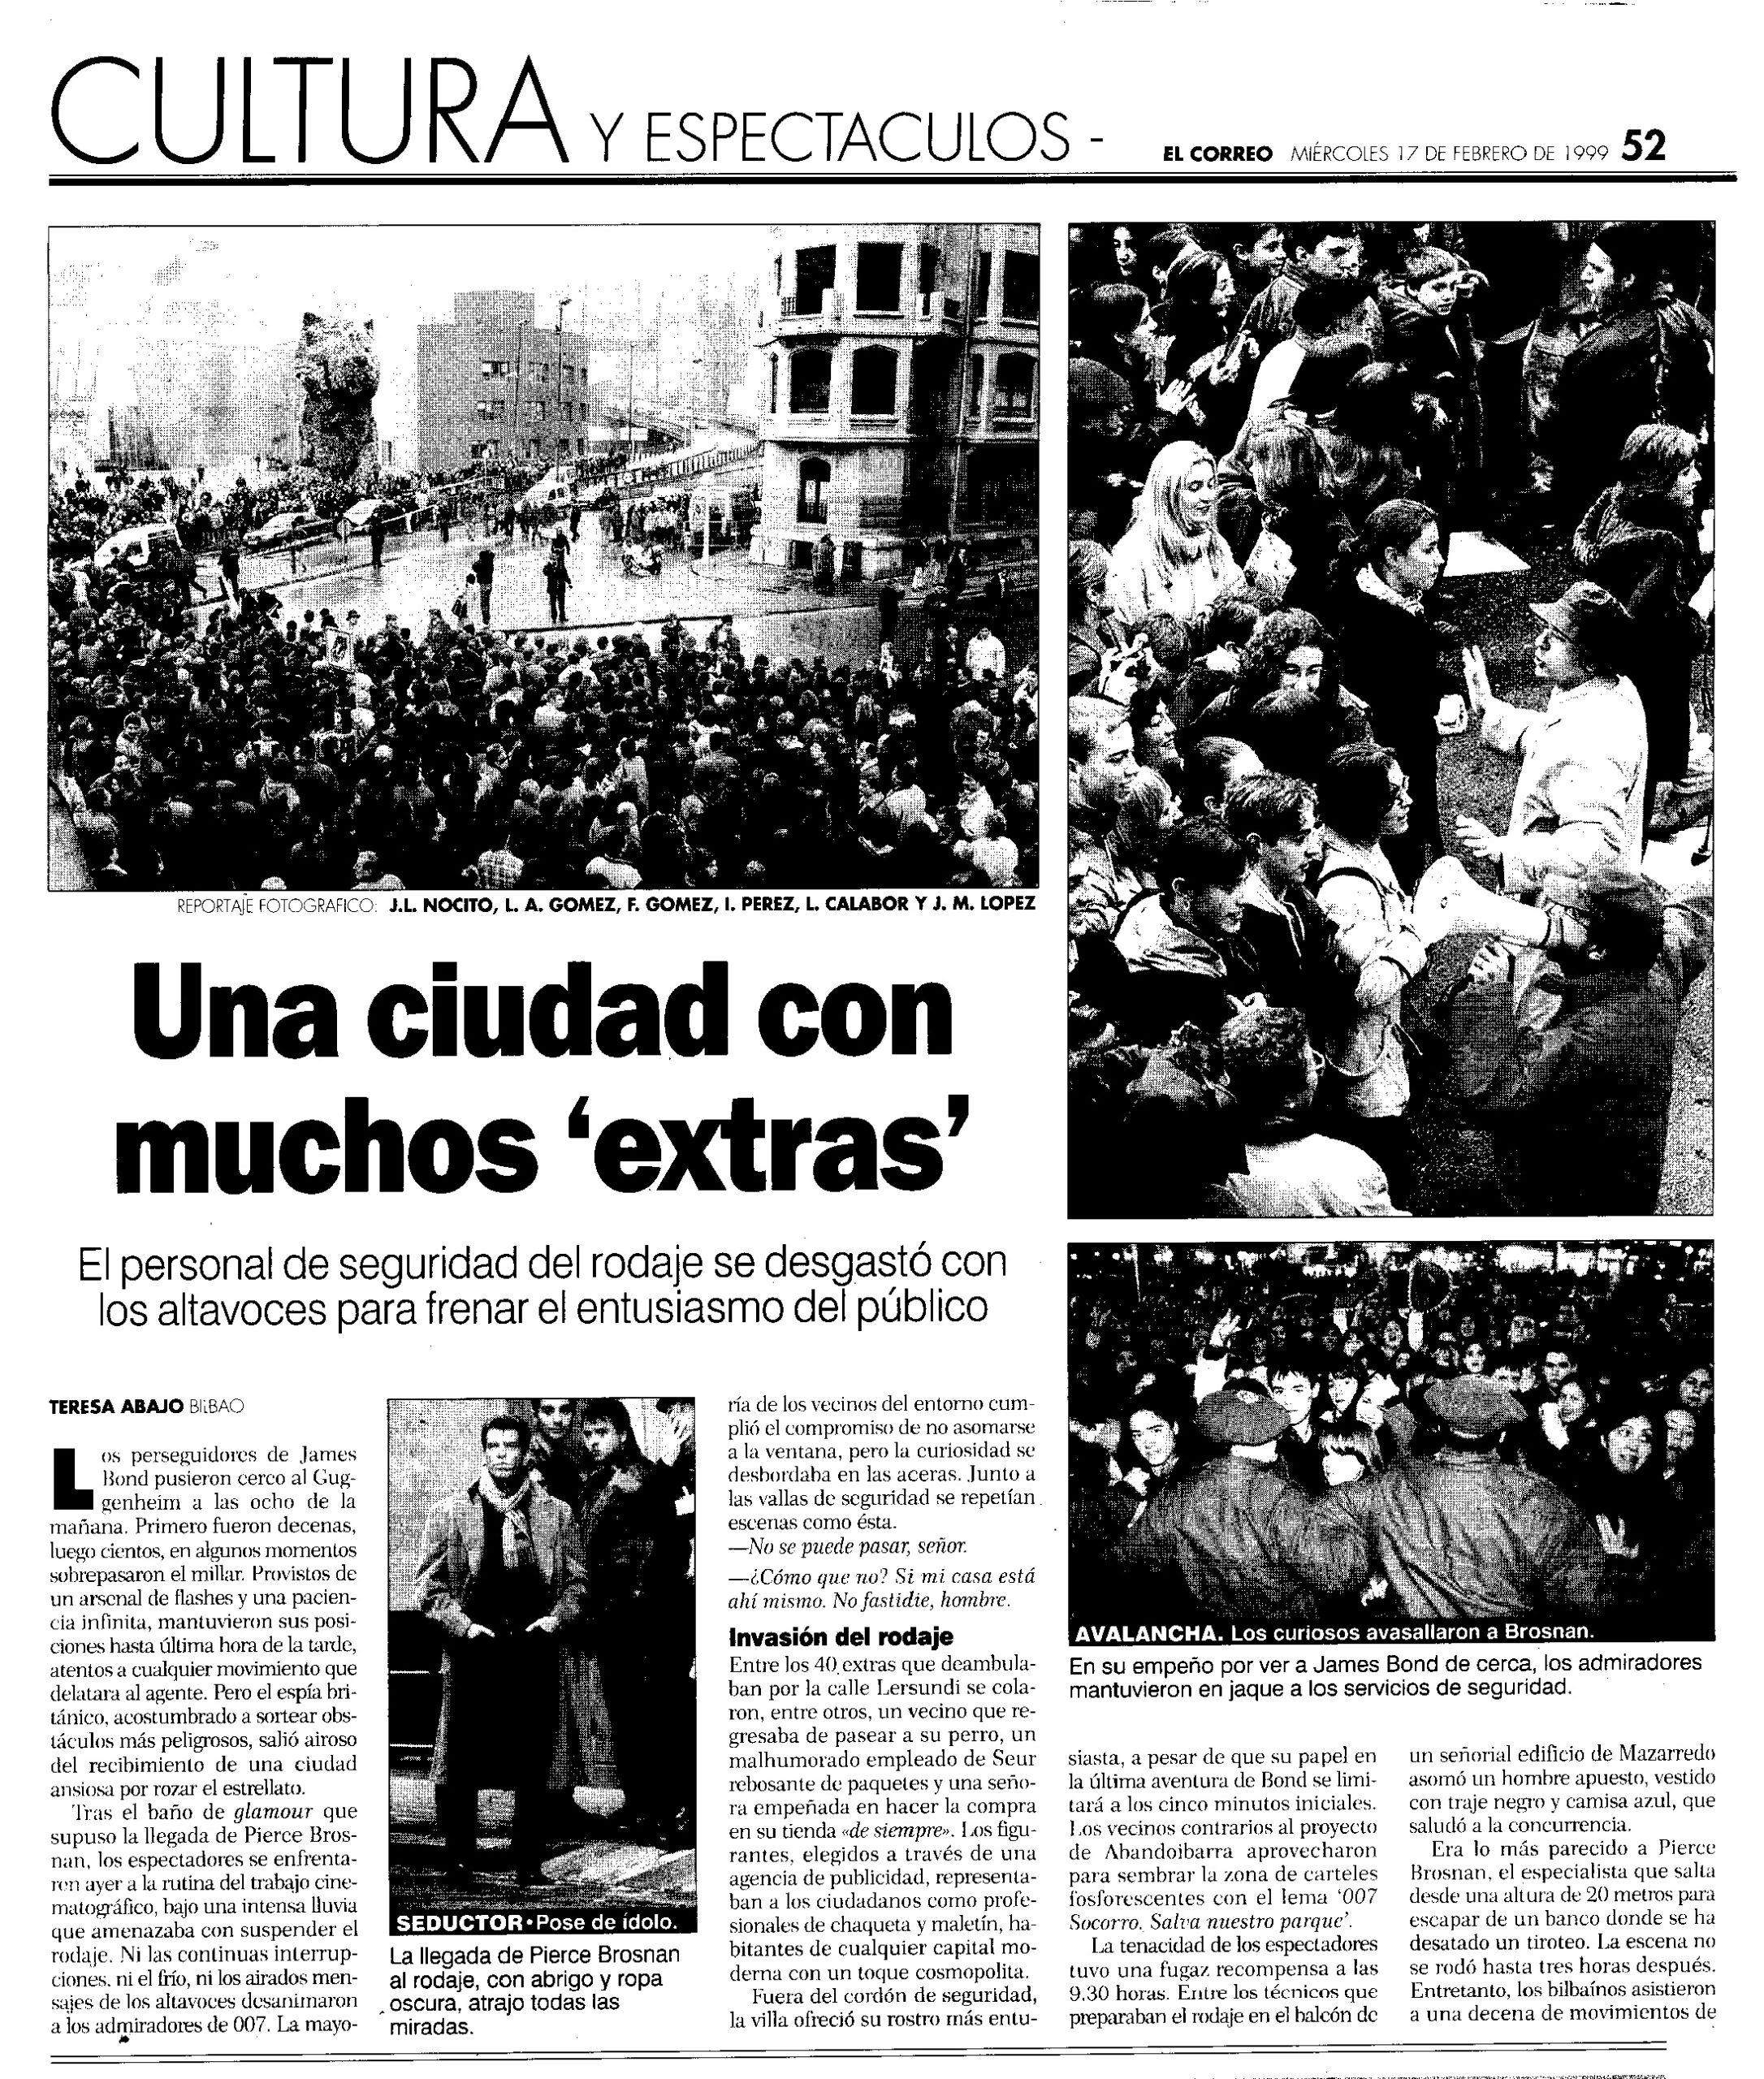 19 1999 02 17 El Correo Alava 52 Rodaje Bilbao scaled